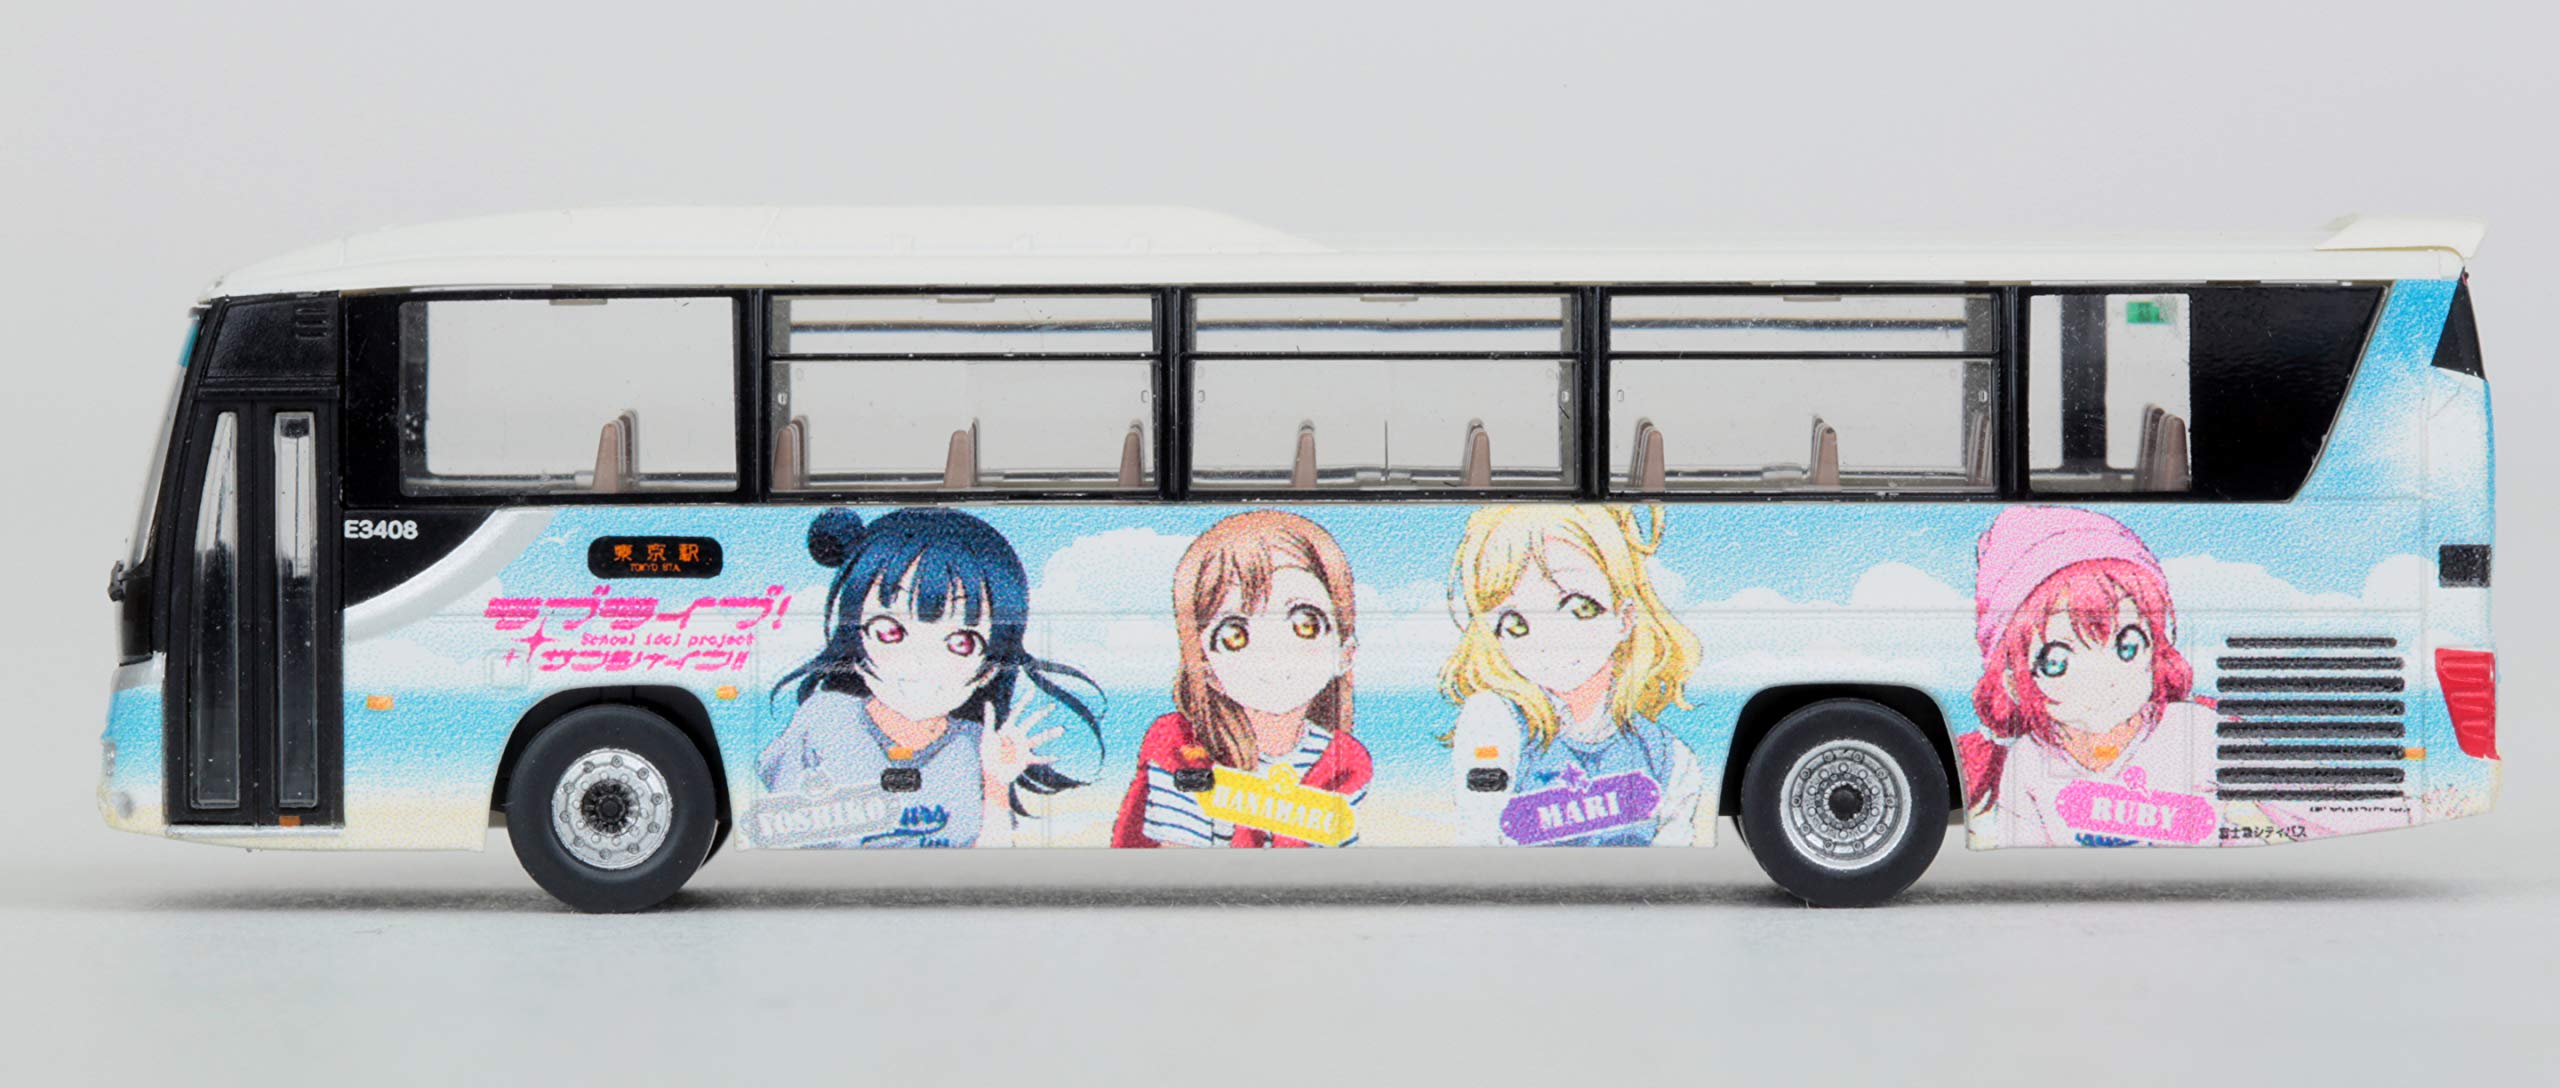 Tomytec Fujikyu City Bus Diorama Love Live Sunshine! Wrapping Bus - Limited Edition